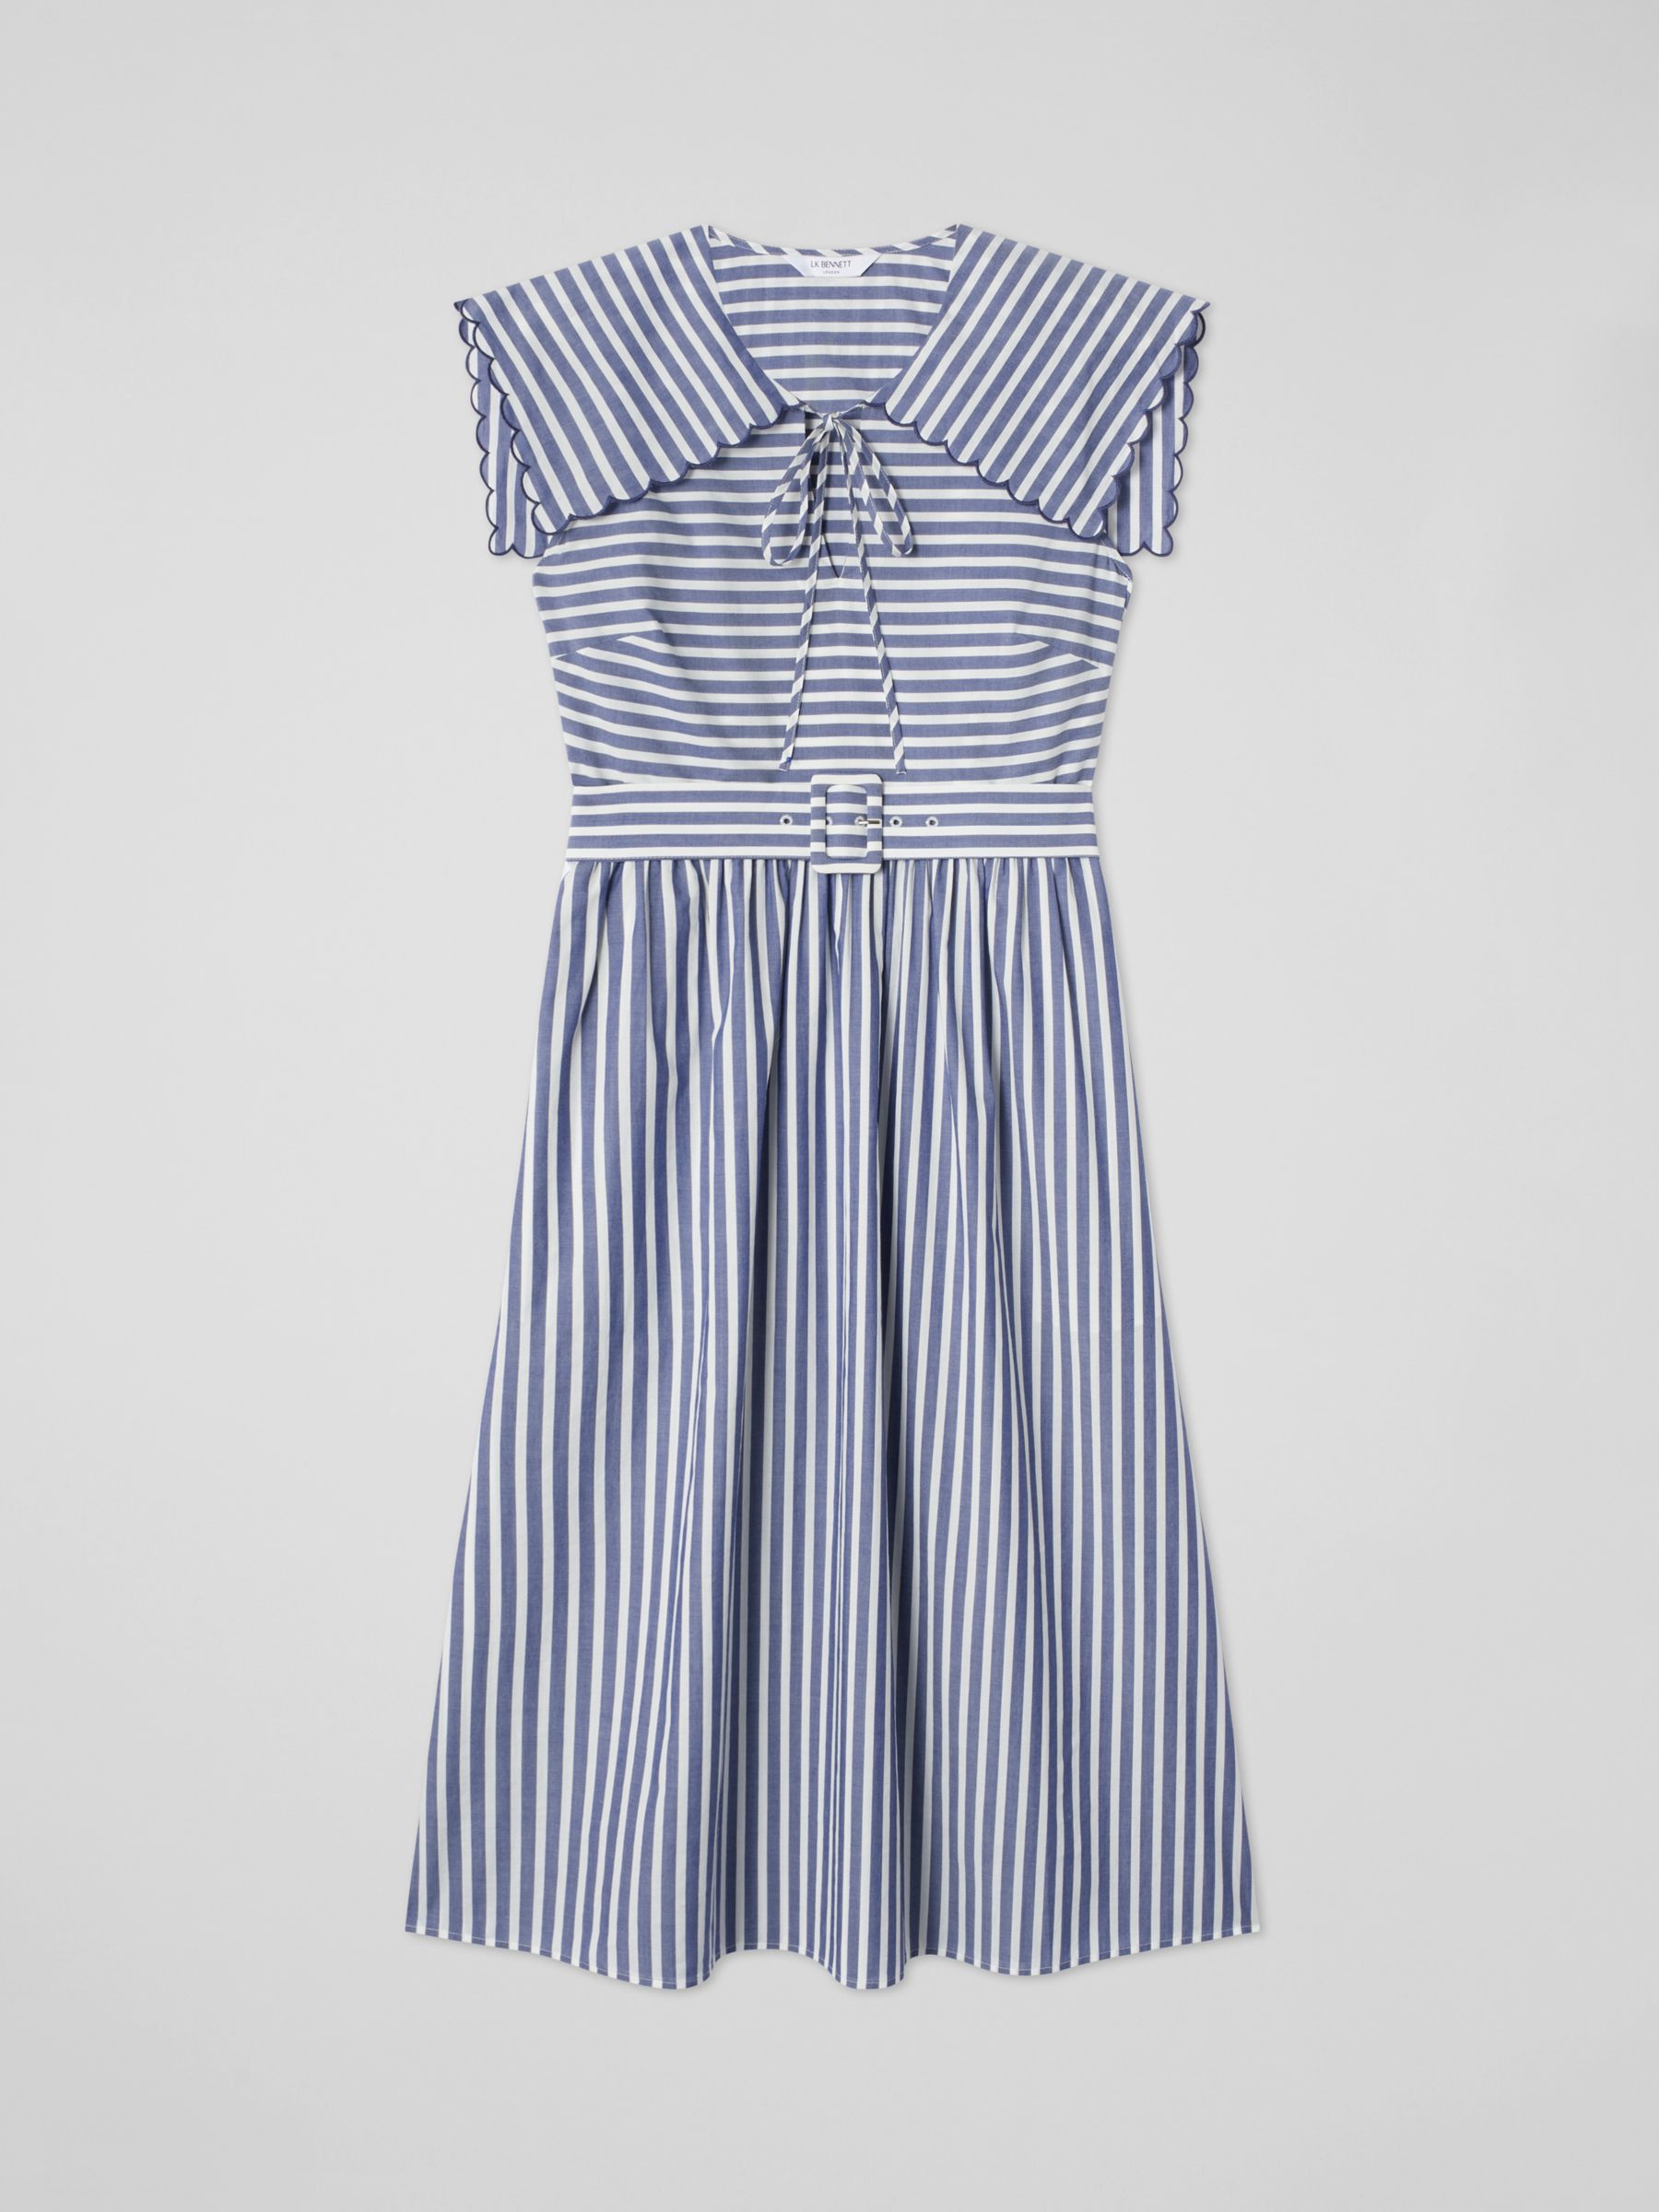 L.K.Bennett Beau Stripe Midi Dress, Navy/Cream, 6